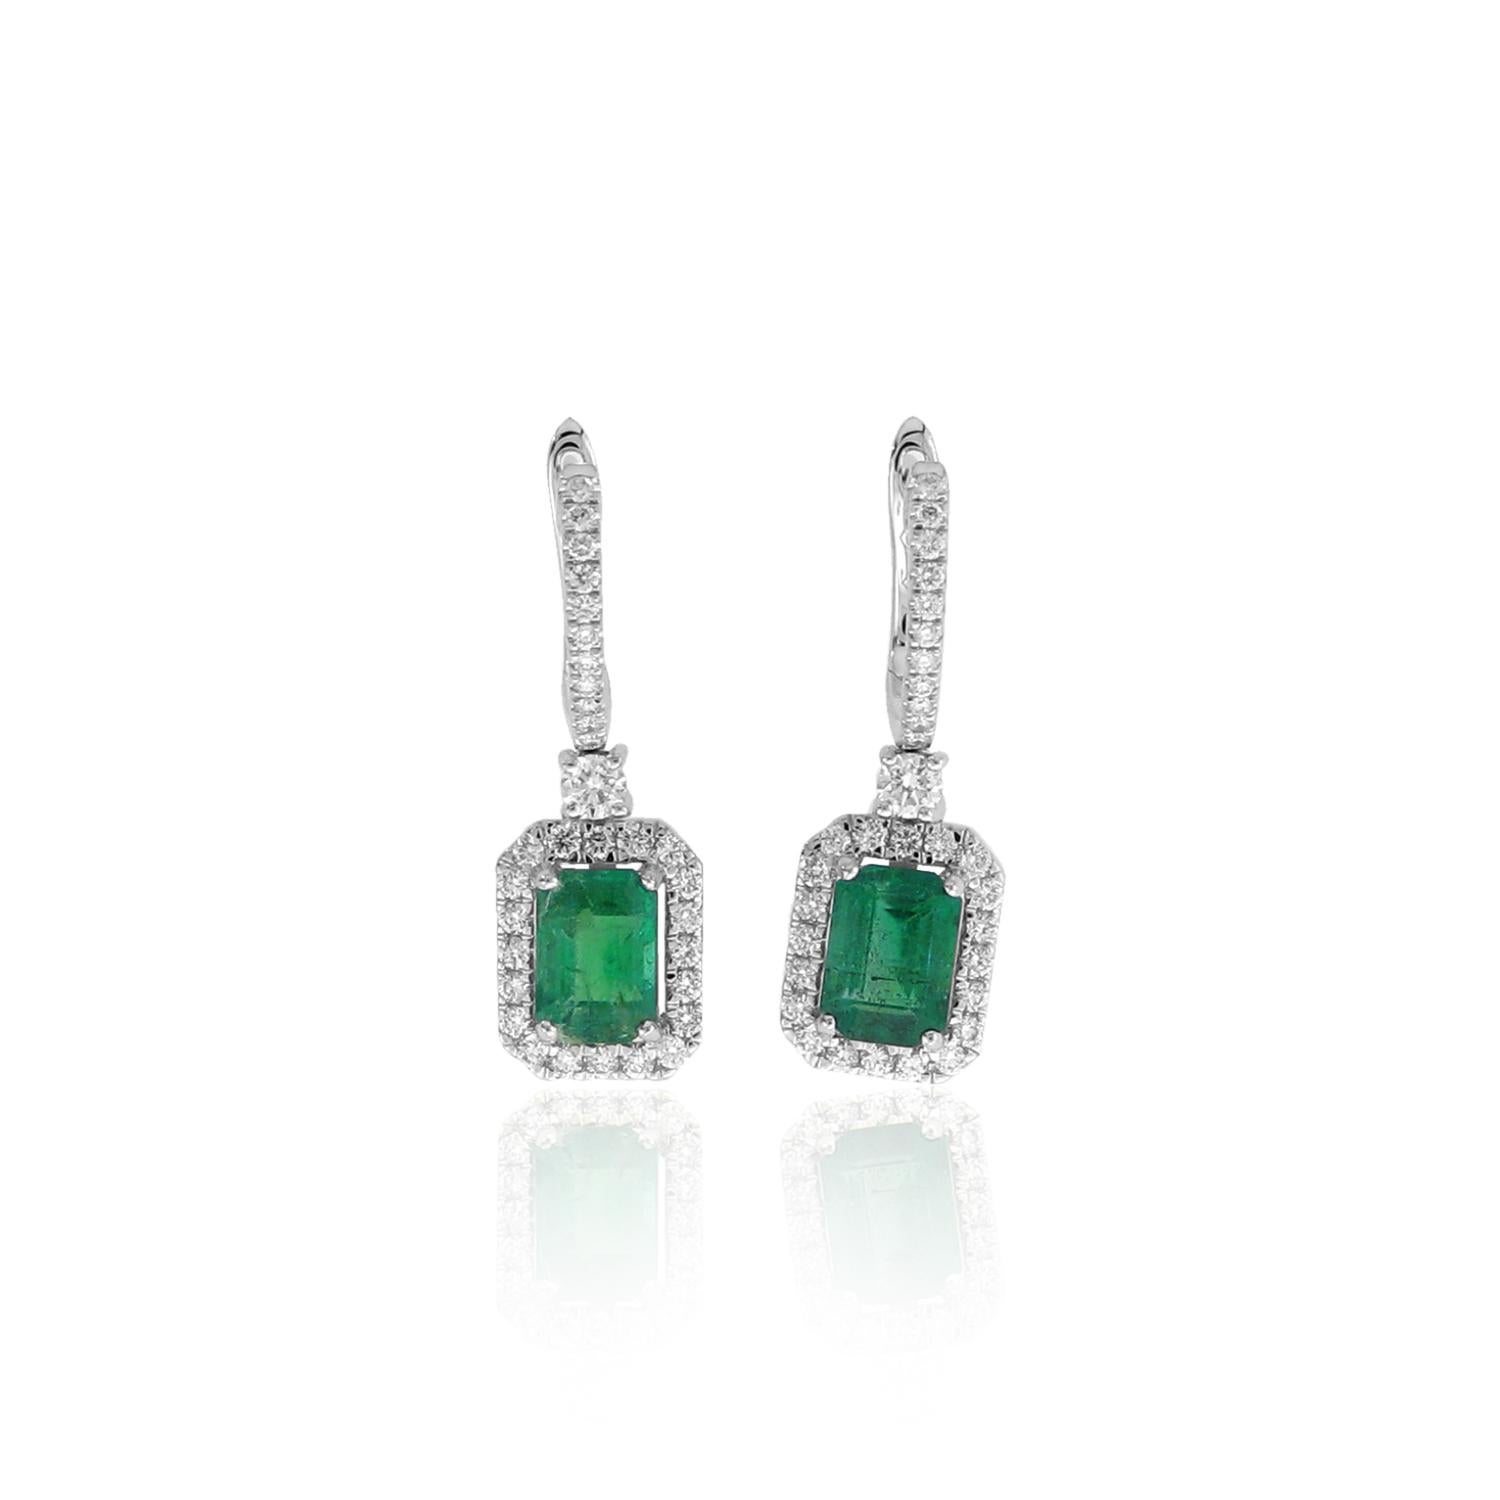 Emerald Cut Emeralds: 2.14ct
Diamonds: .63ct
Earring Metal - 18kwg
Tag #: 17953